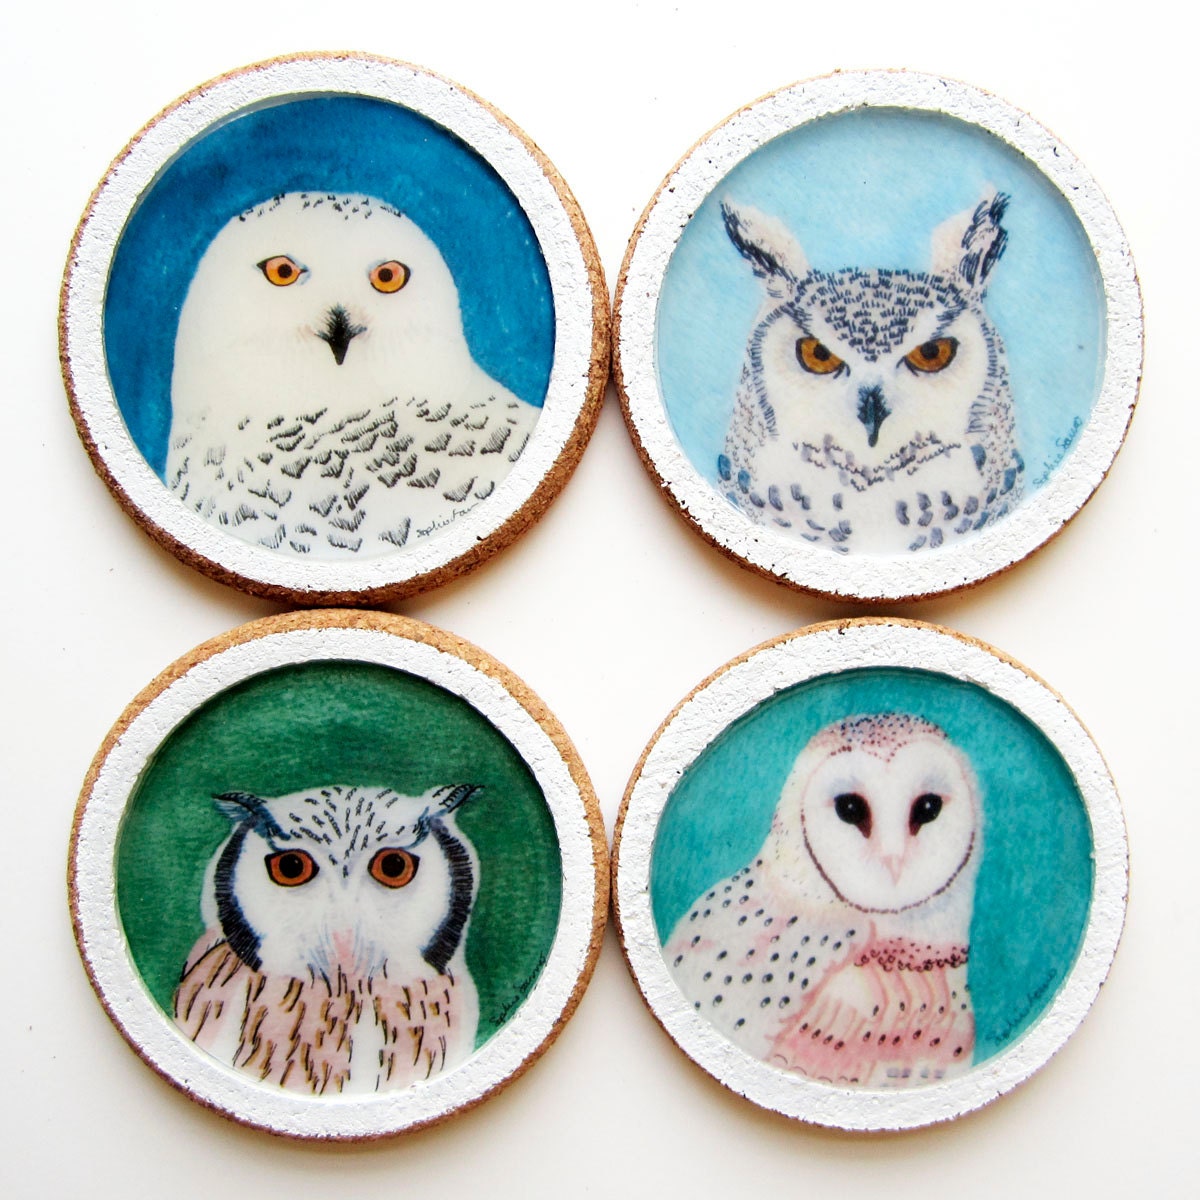 SALE - Wild Hoots - Cork Coasters from Original Artwork - Set of 4 Owls (barn, snowy, great horned, long eared)